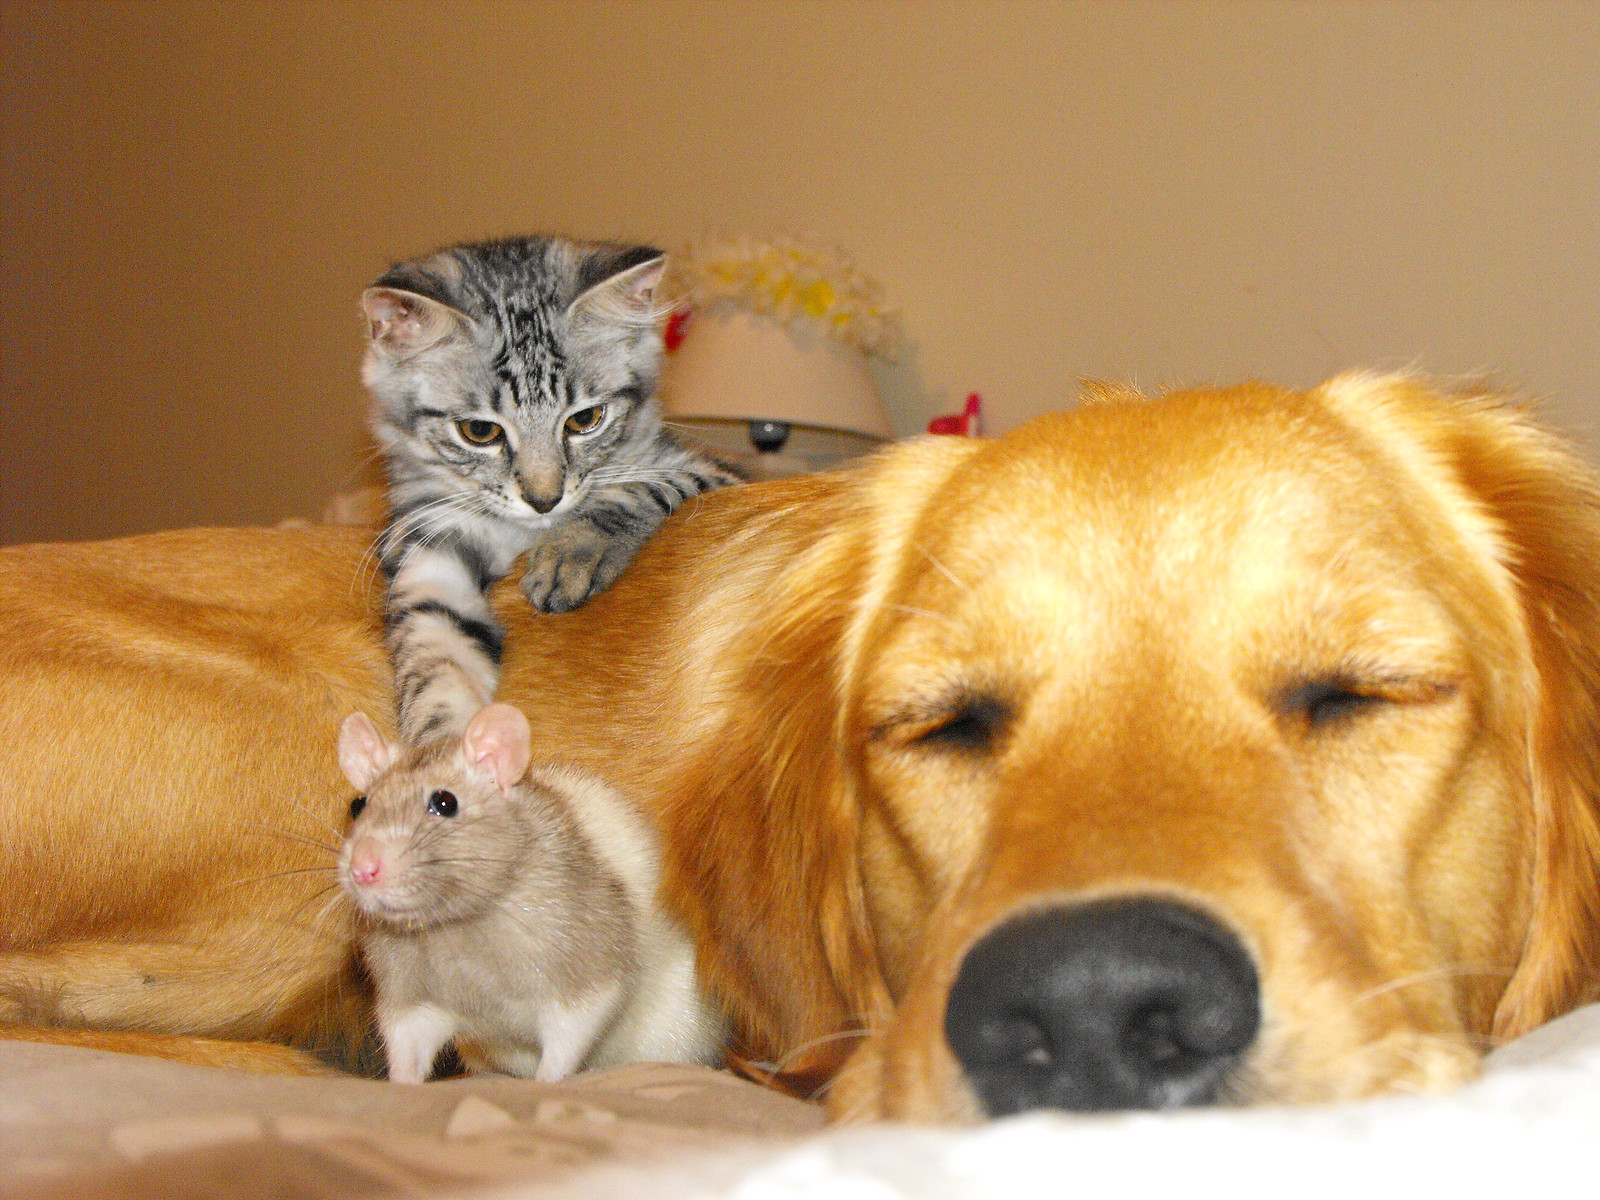 My animal friends. Домашние животные. Кошки и собаки. Собака кошка хомяк. Забавные домашние животные.